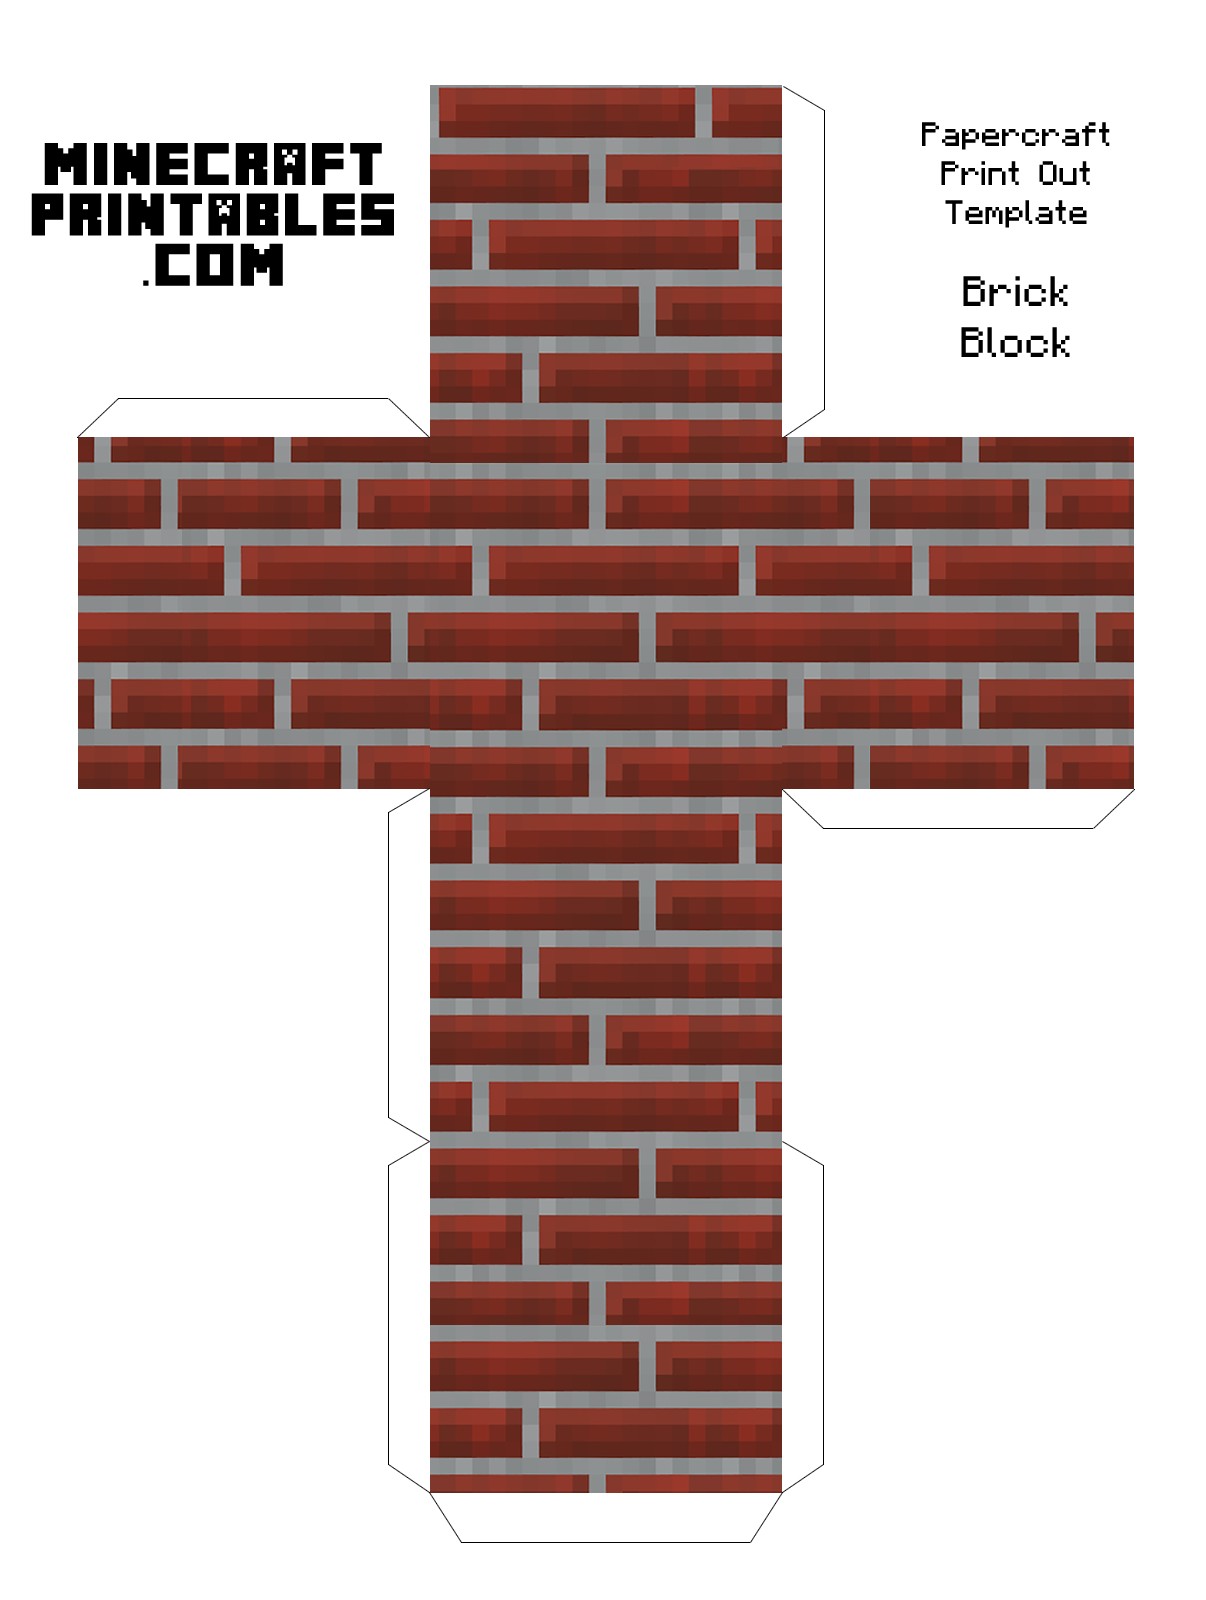 Papercraft Minecraft Pig Brick Block Minecraft Party Pinterest